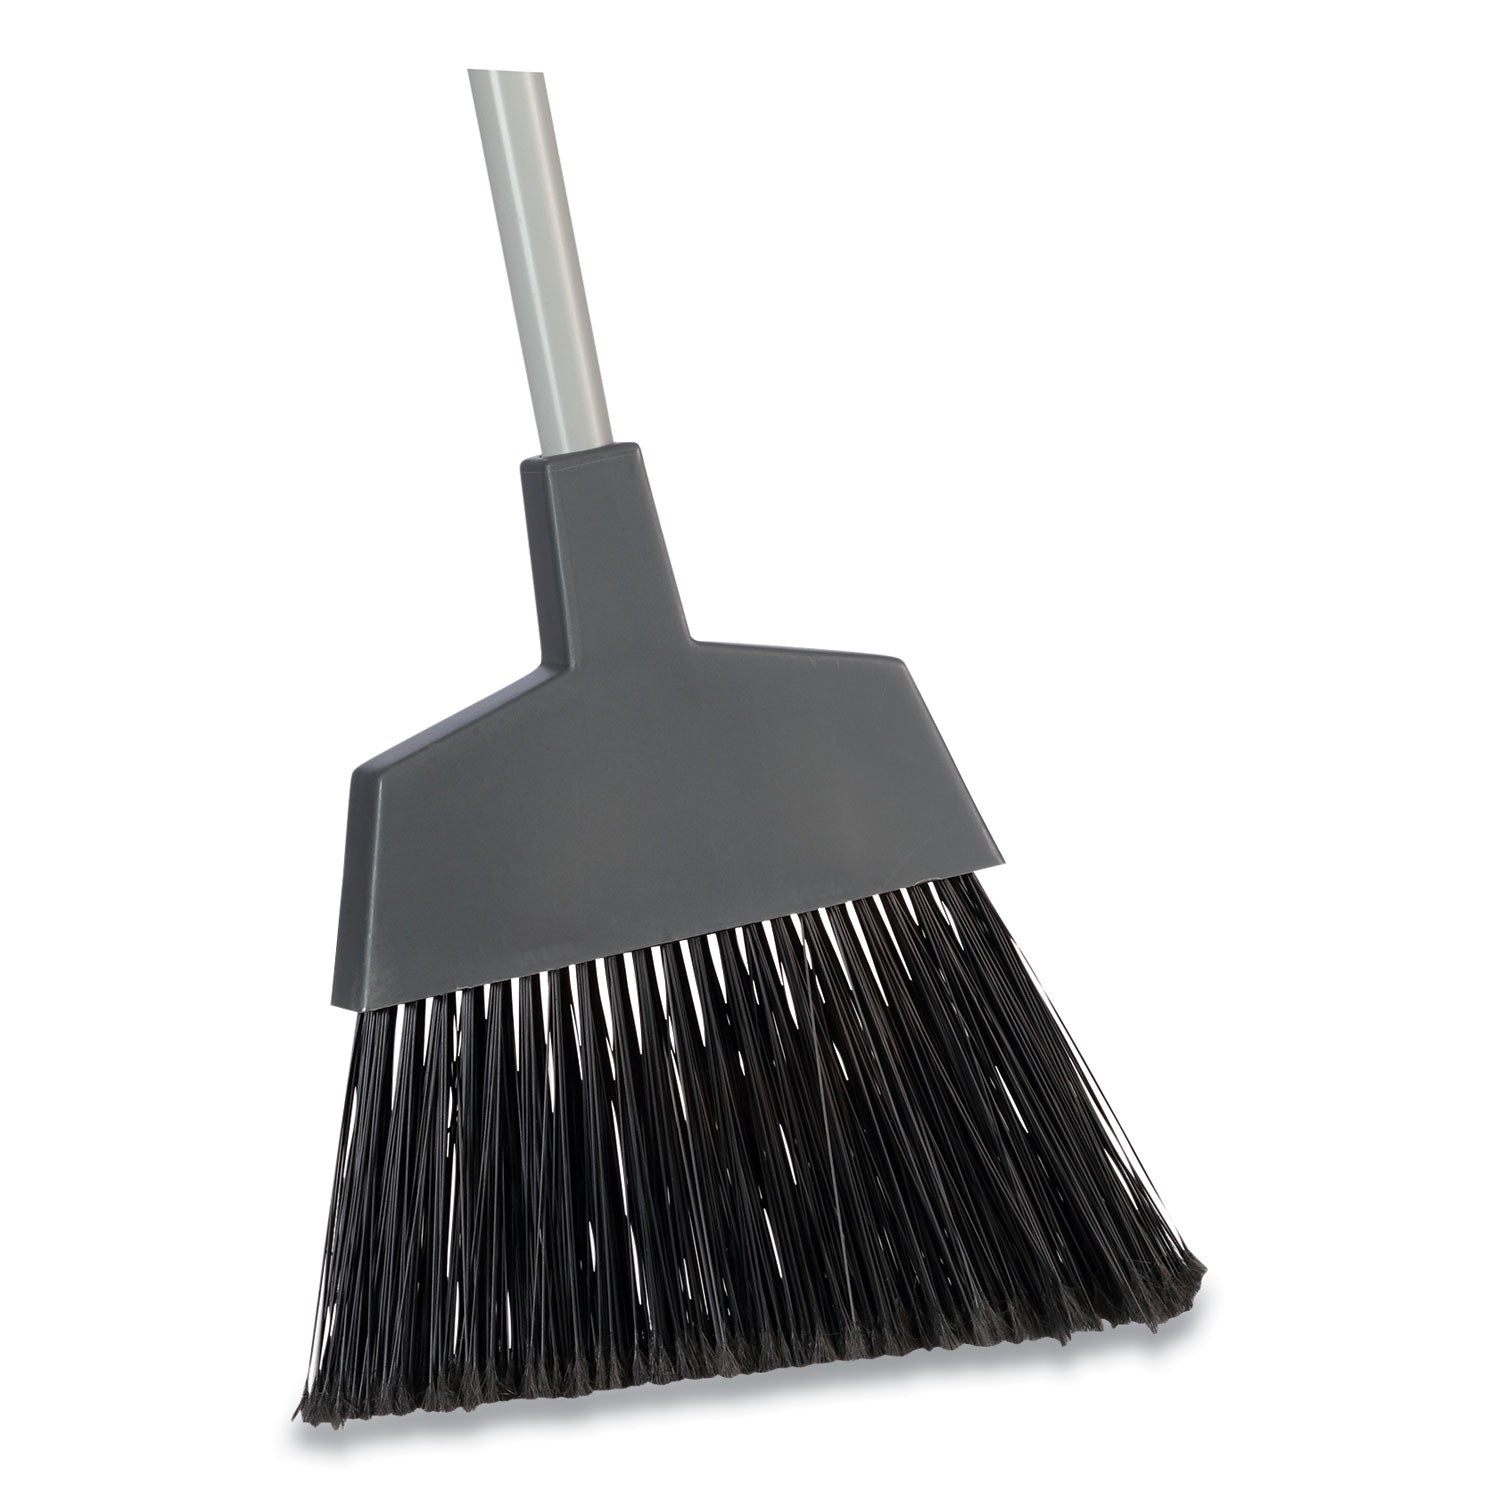 polypropylene-bristle-angled-broom-53-handle-gray_cwz24420007 - 1